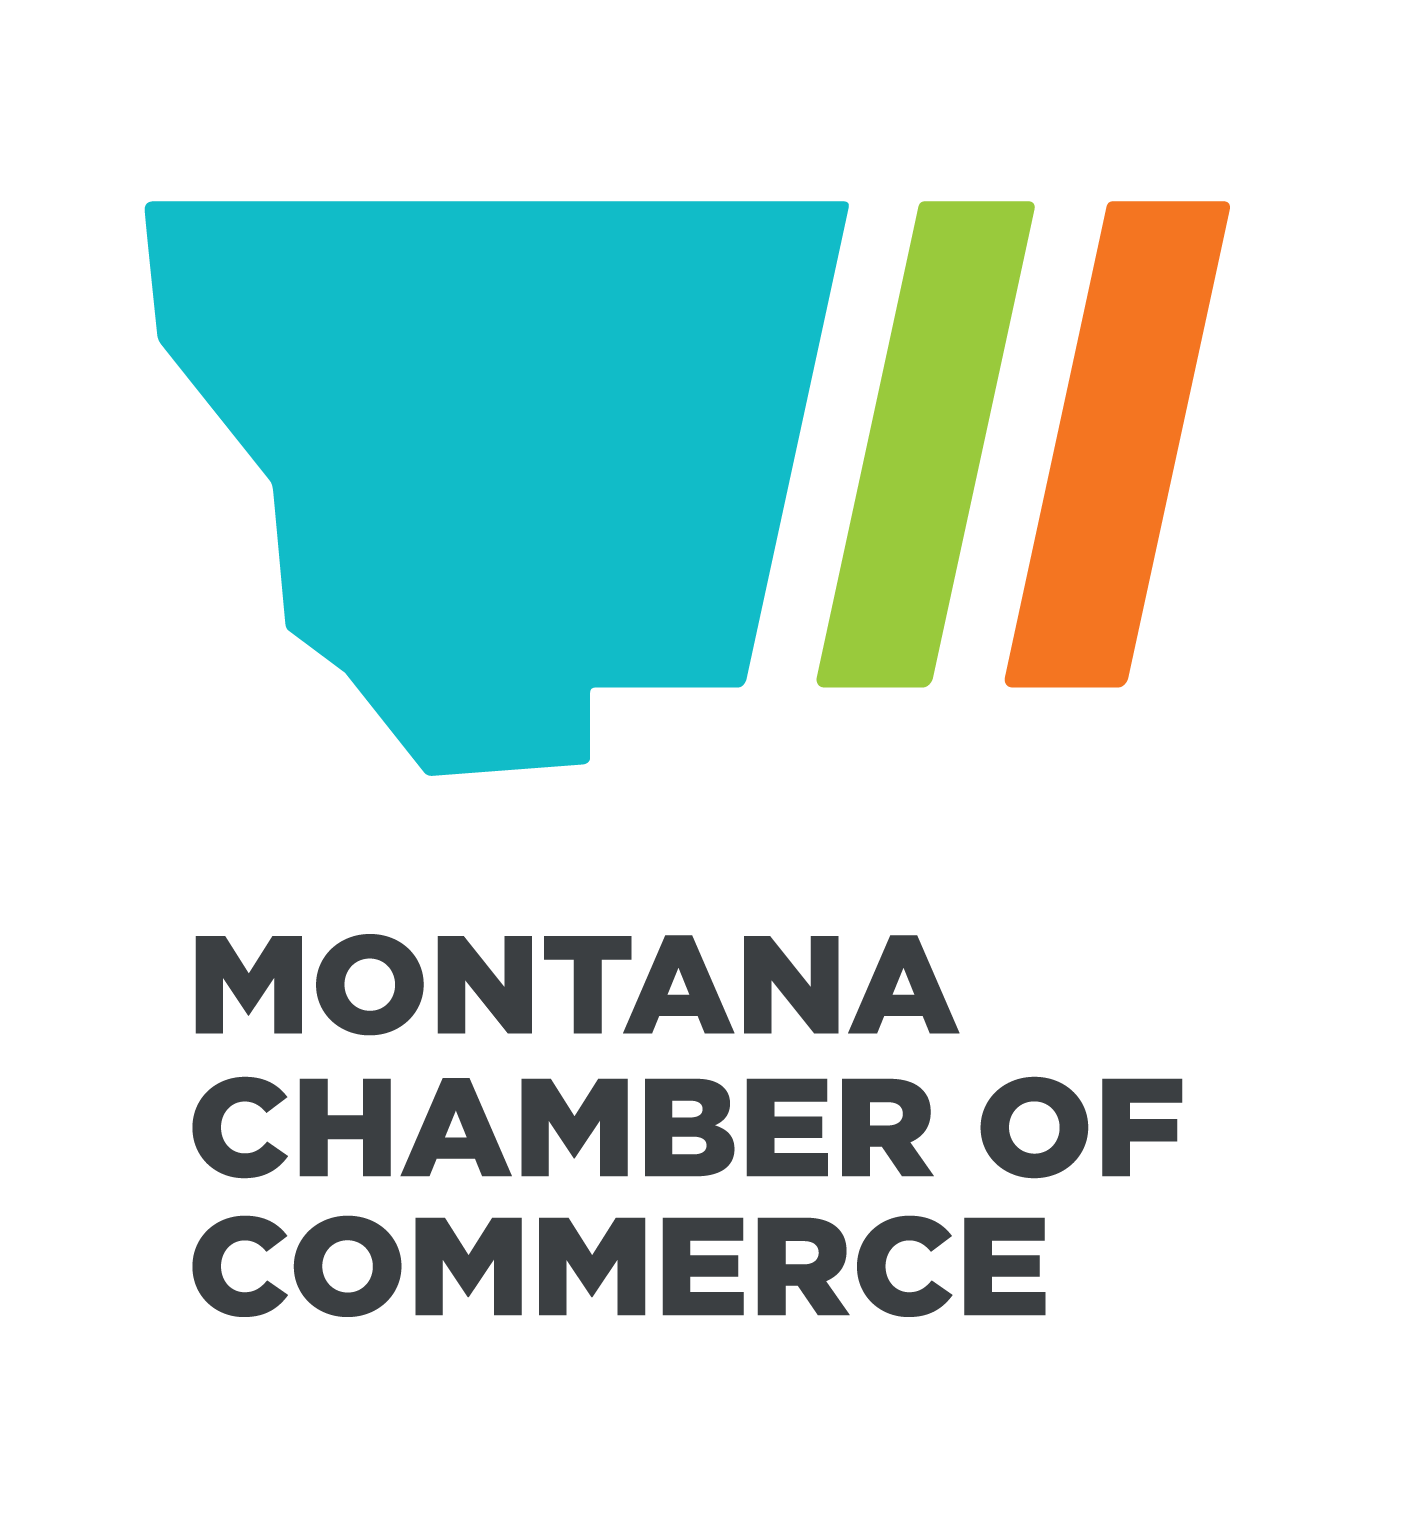 Montana Chamber of Commerce logo